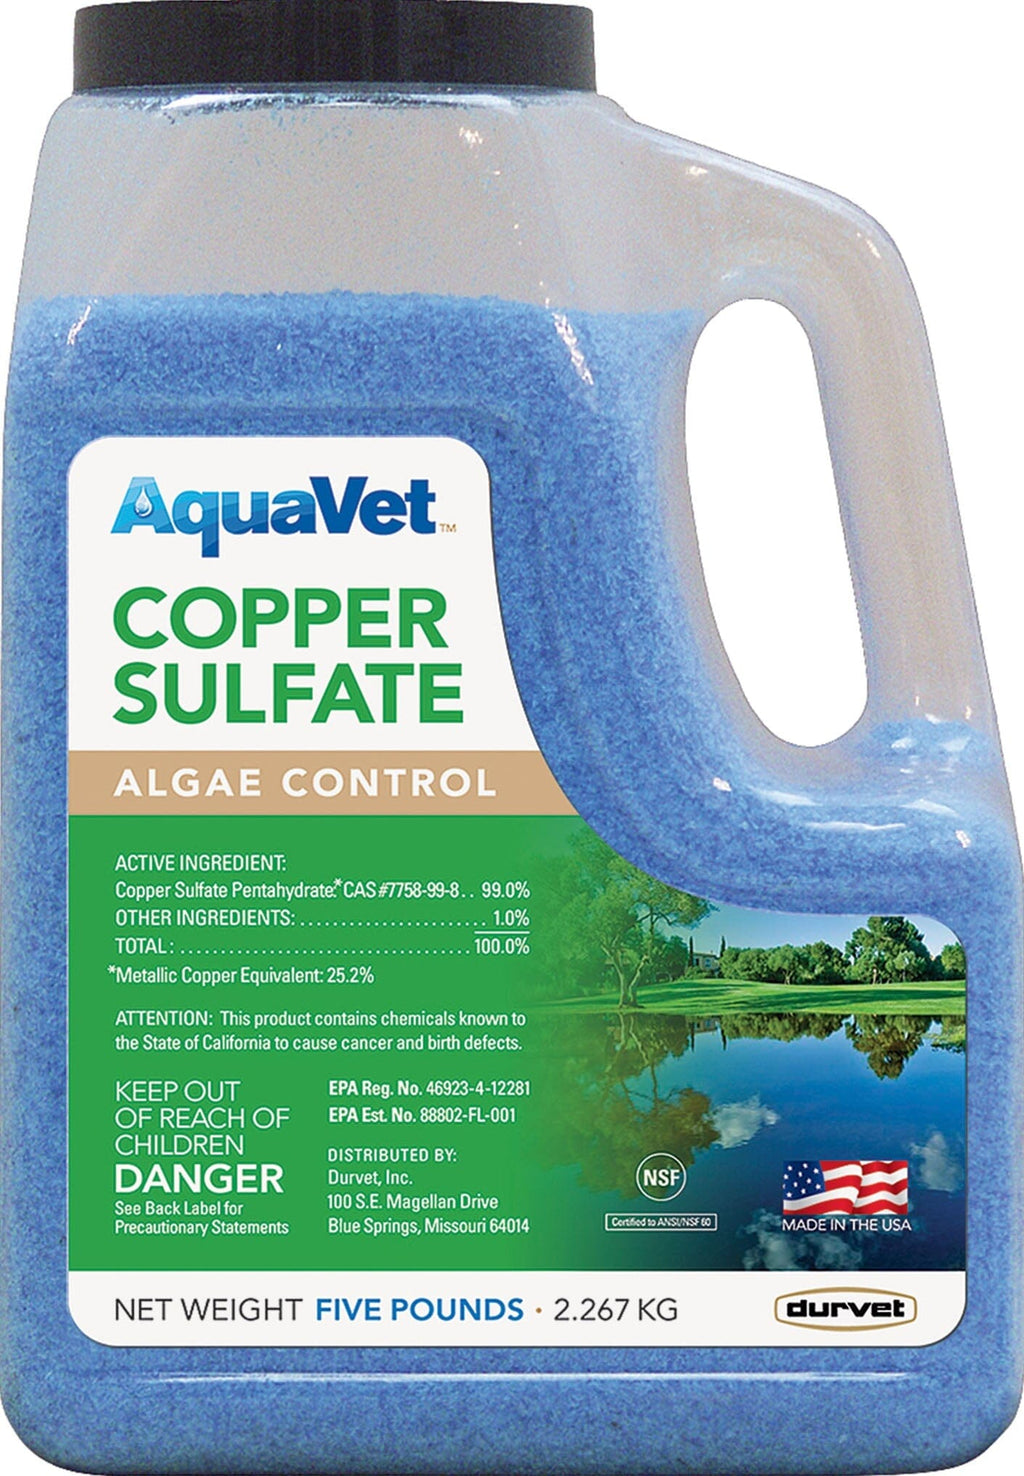 Aquavet Copper Sulfate Algae Control Pond Water Treatment - 5 Lbs  